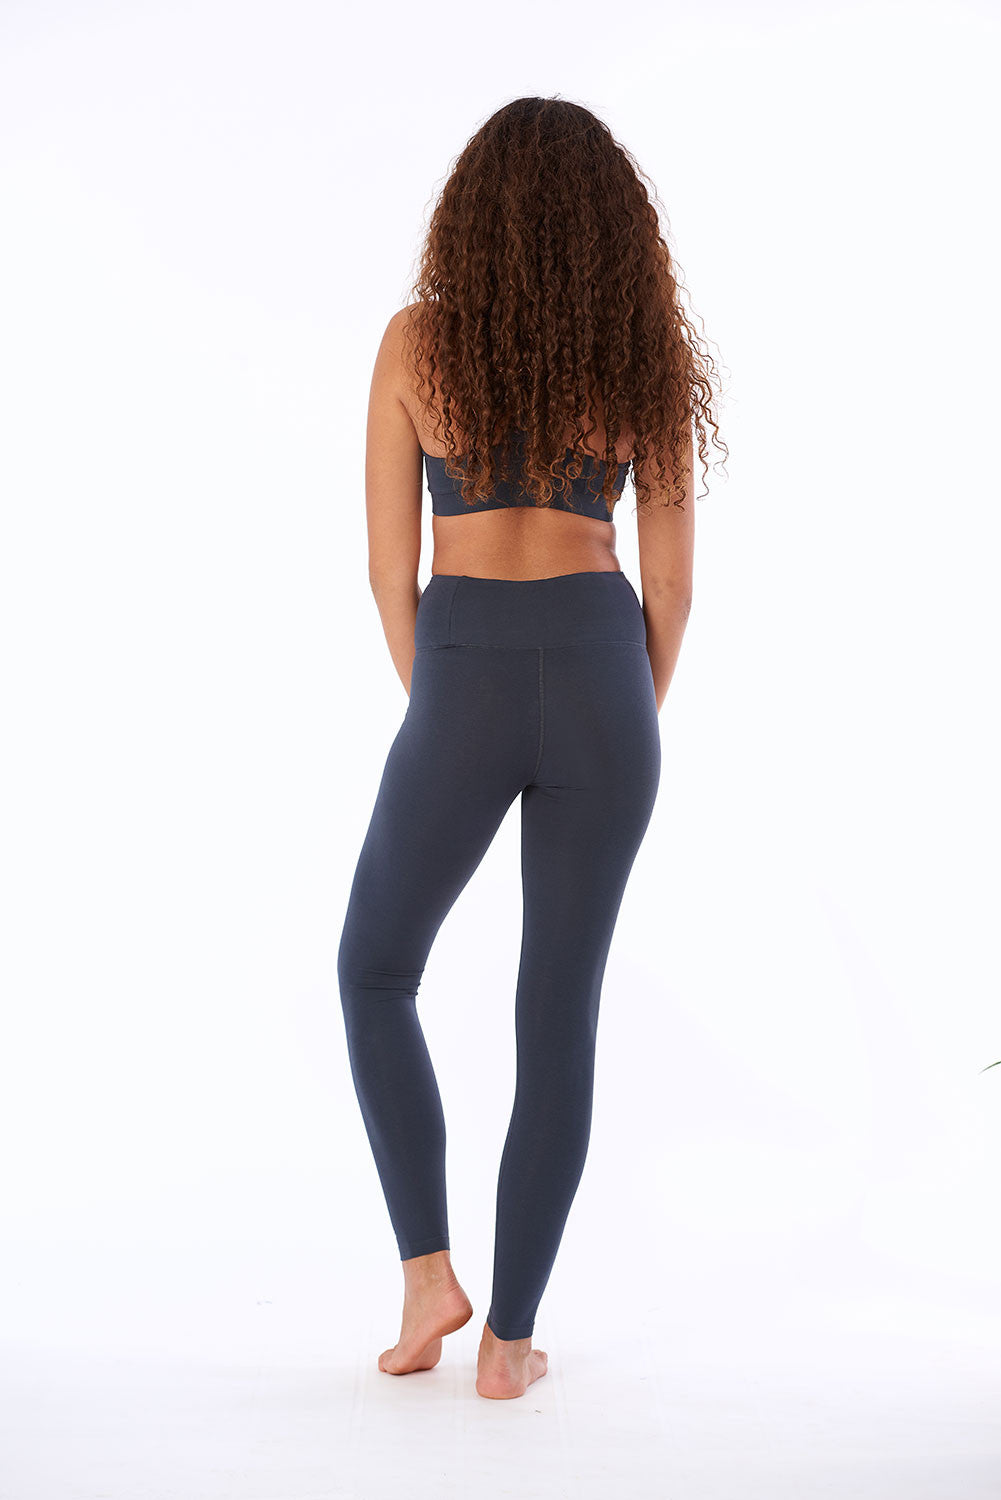 Activewear Yoga pants high cut full length 